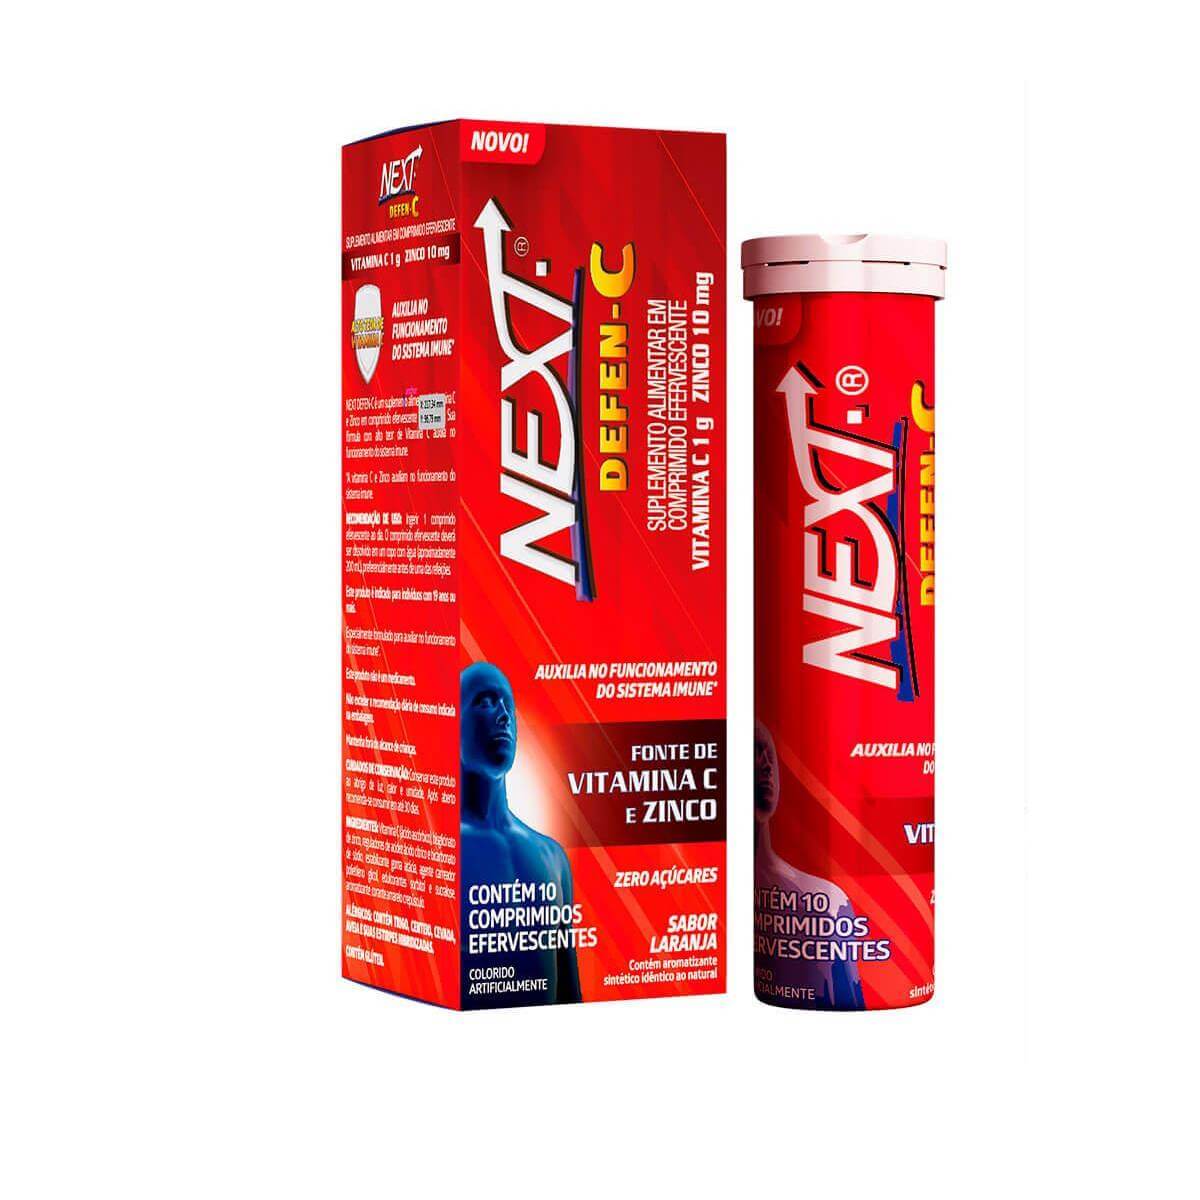 Next Vita-C +Zinco 10 Comprimidos Efervescentes